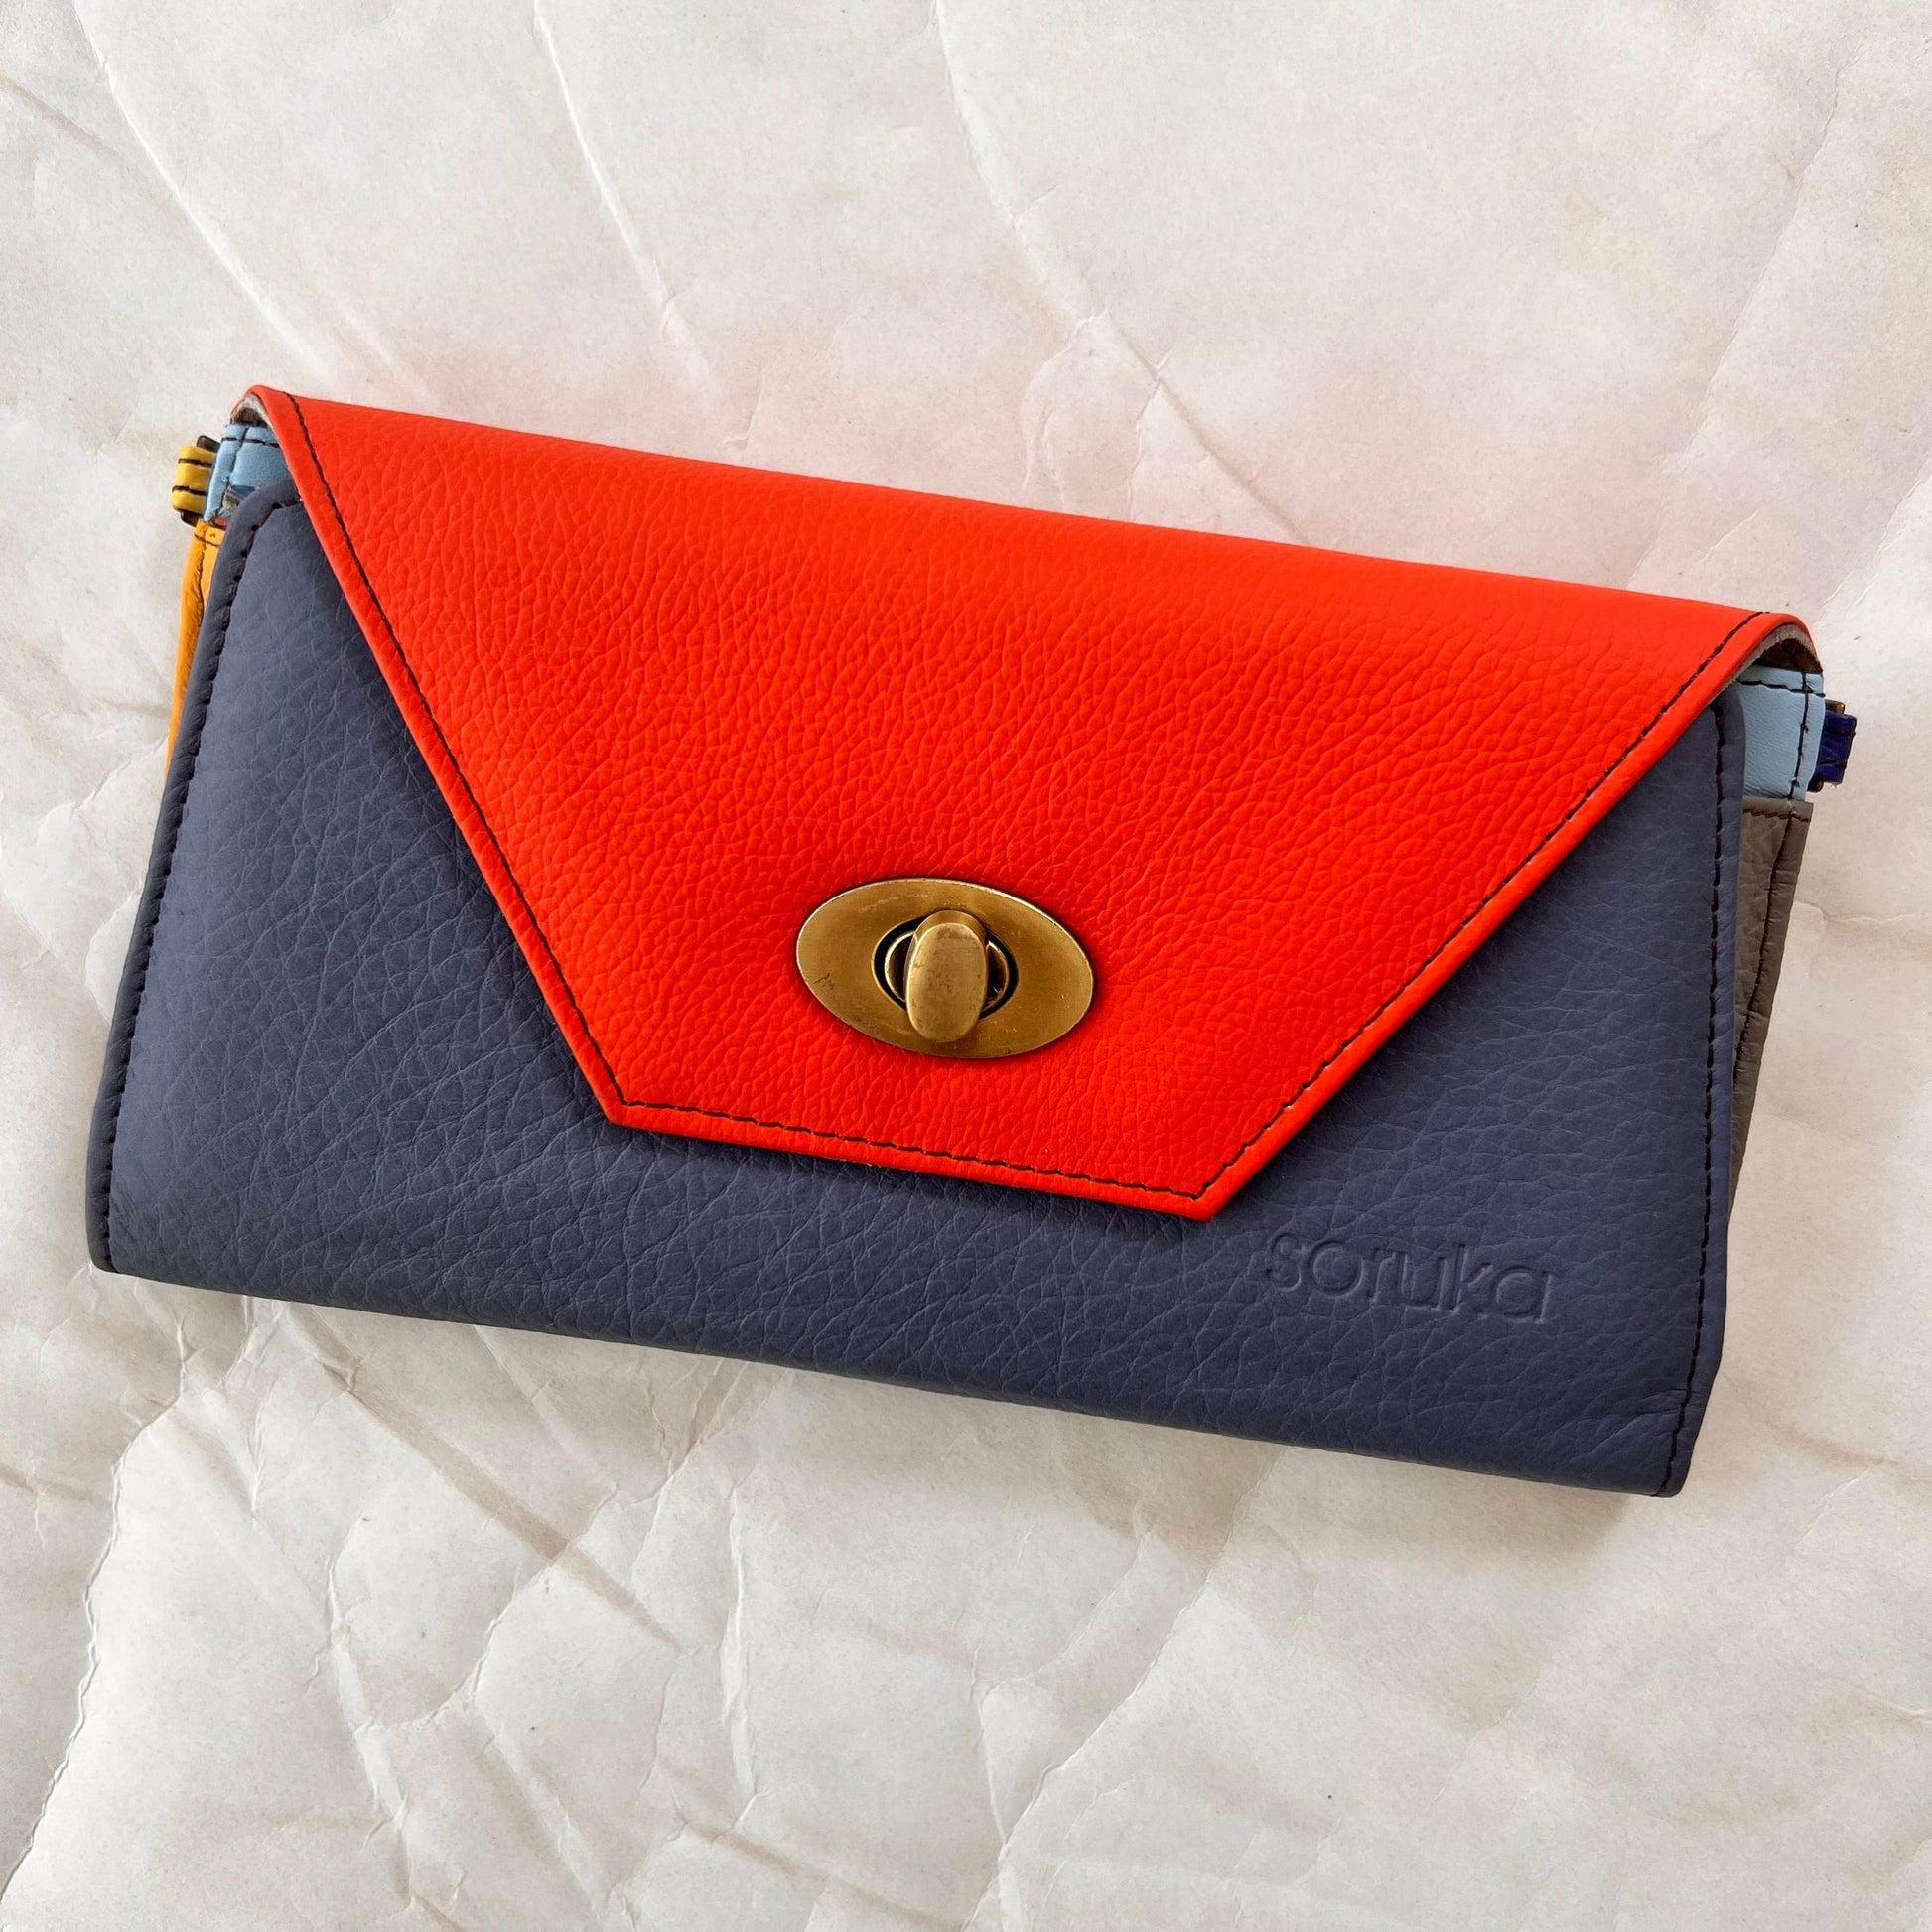 blue secret clutch wallet with orange flap.